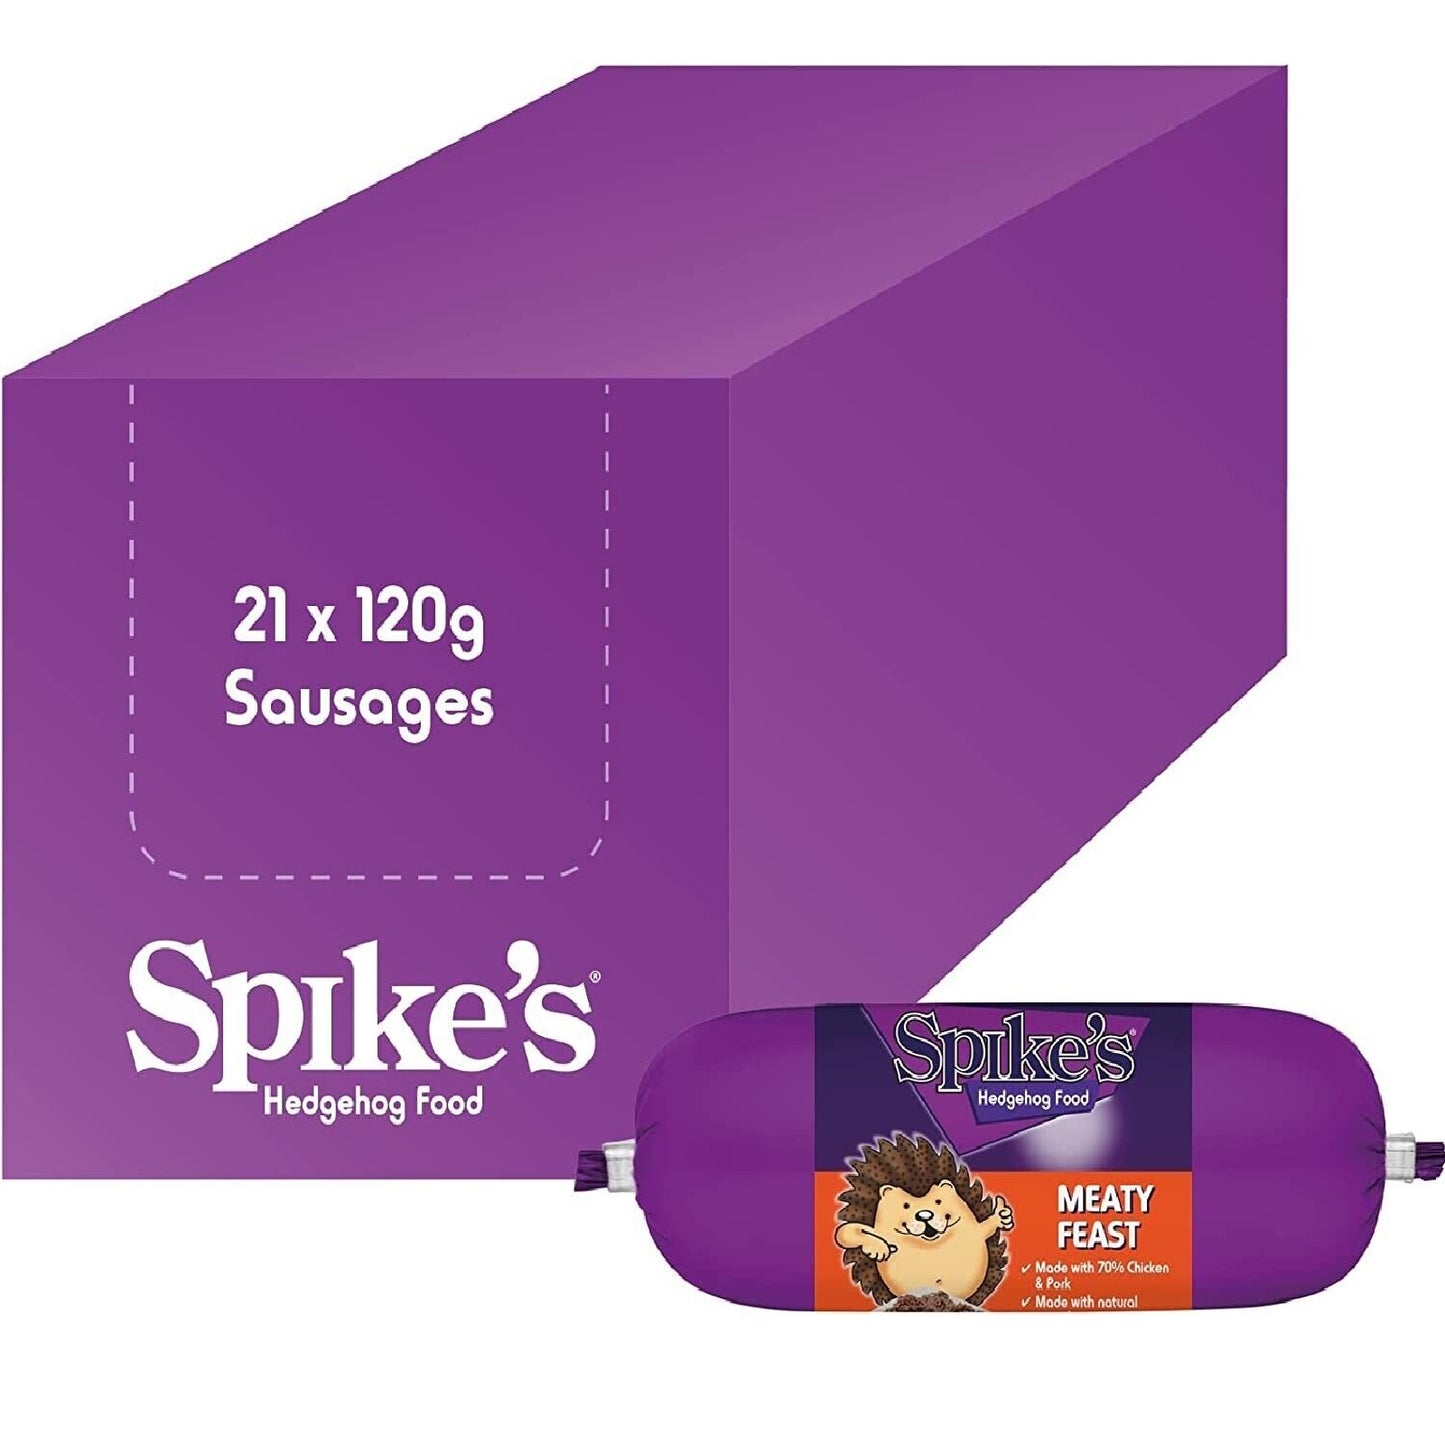 Spikes - Meaty Feast Hedgehog Food (120g)